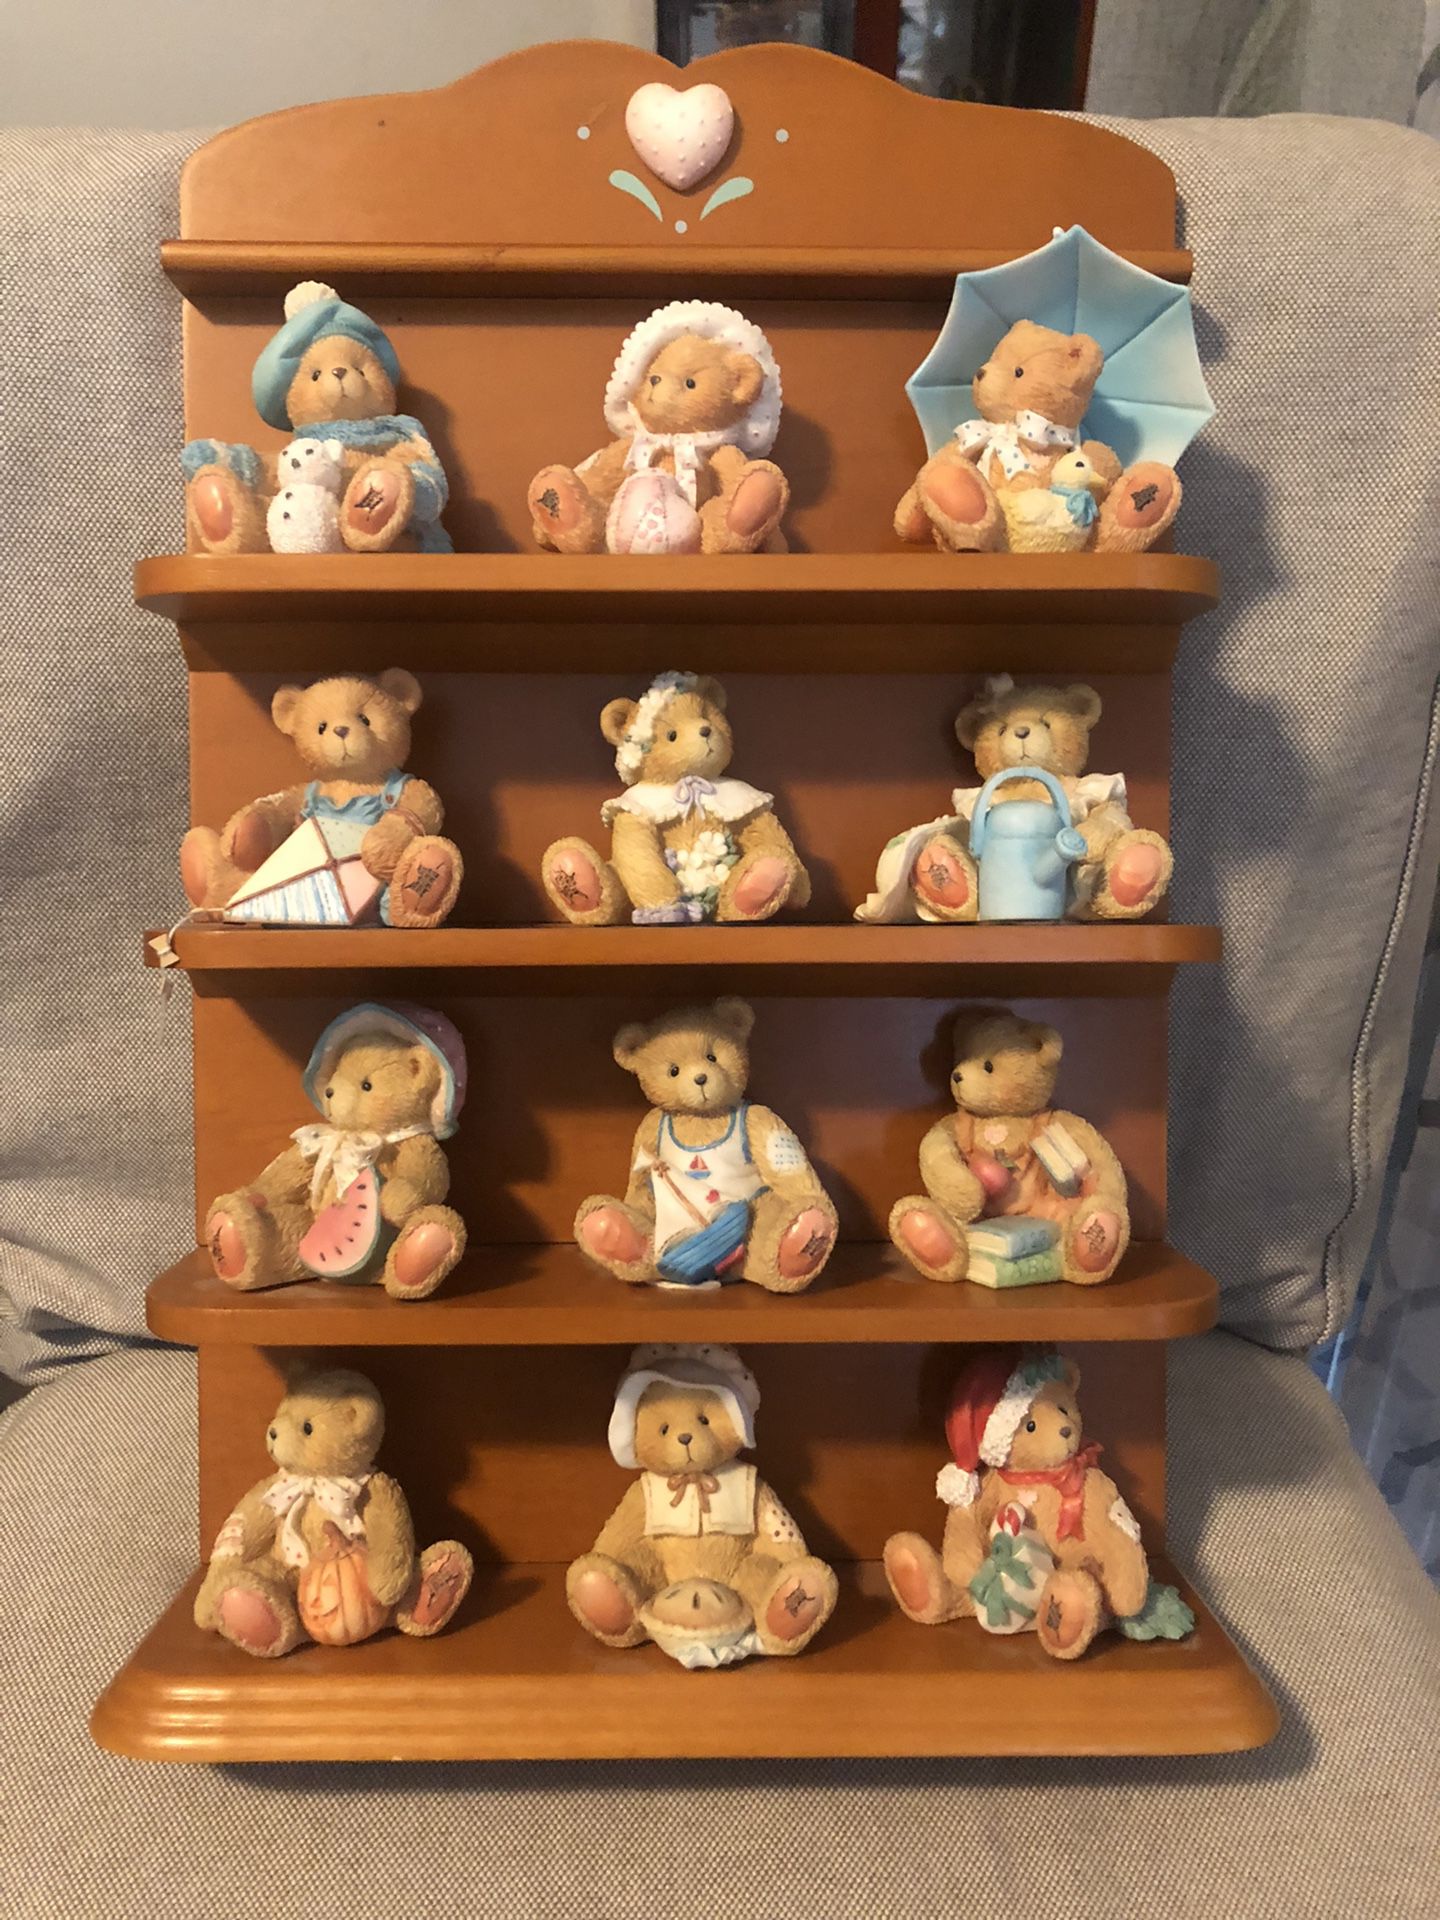 1993 Enesco Cherished Teddies 12 monthly bears with Display shelf